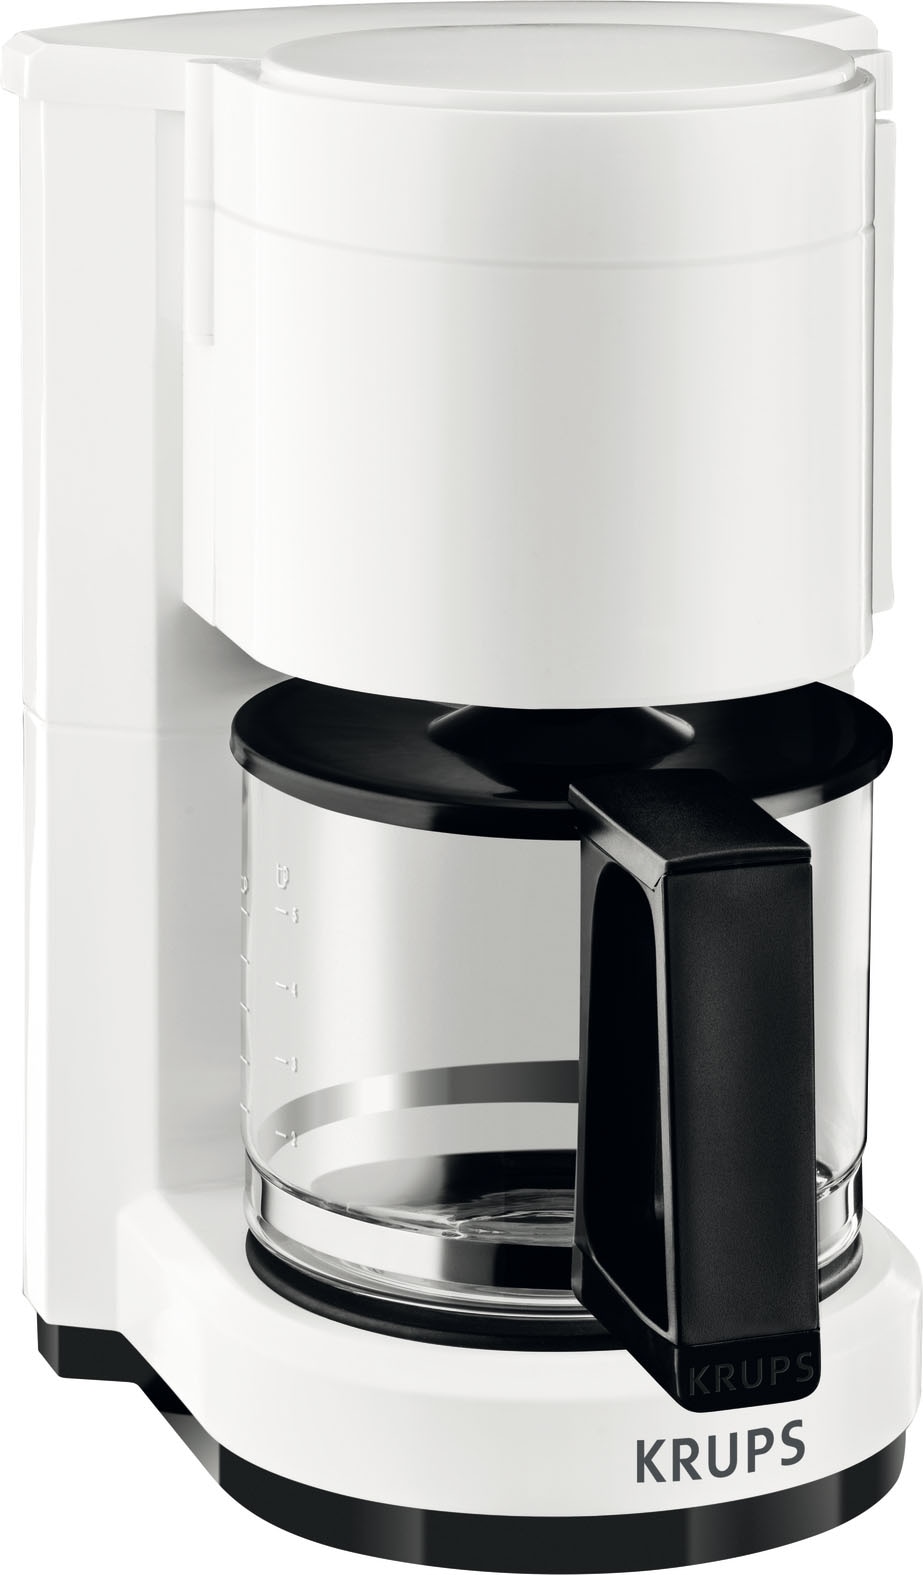 Krups Filterkaffeemaschine »F18301 Aromacafe« auf Raten kaufen